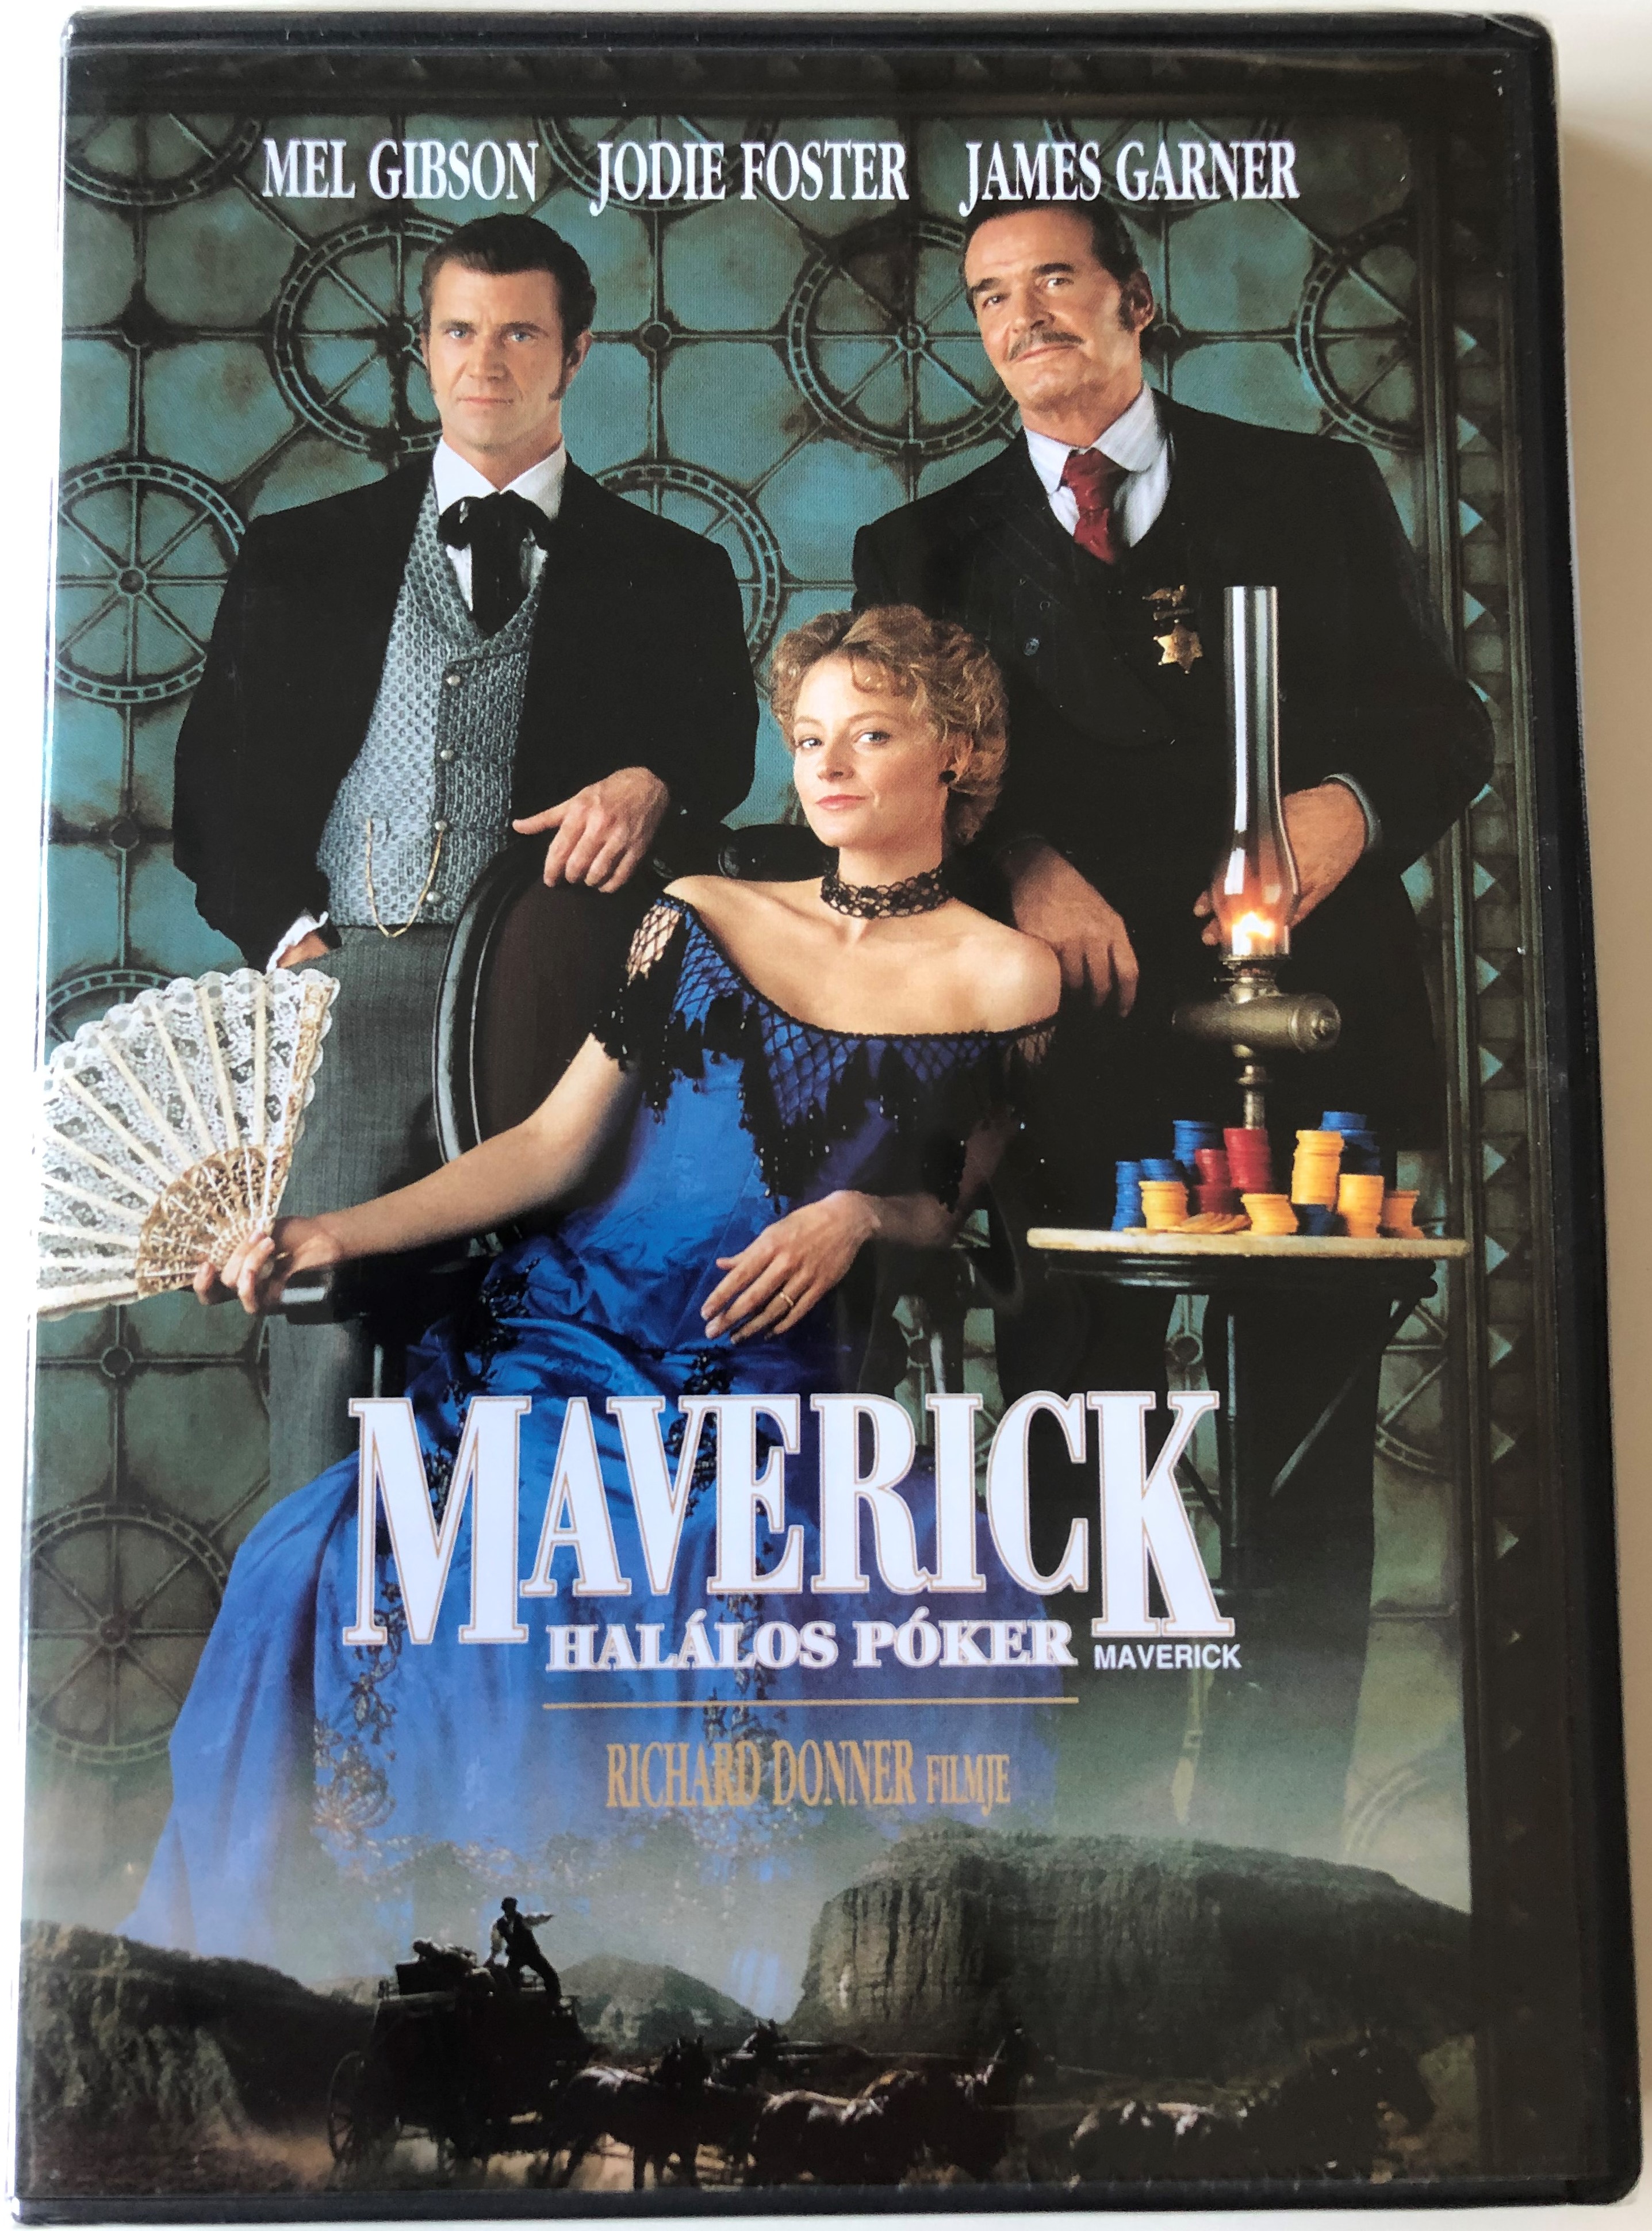 Maverick - Halálos Póker DVD 1994 Maverick / Directed by Richard Donner /  Starring: Mel Gibson, Jodie Foster, James Garner, Graham Greene - Bible in  My Language